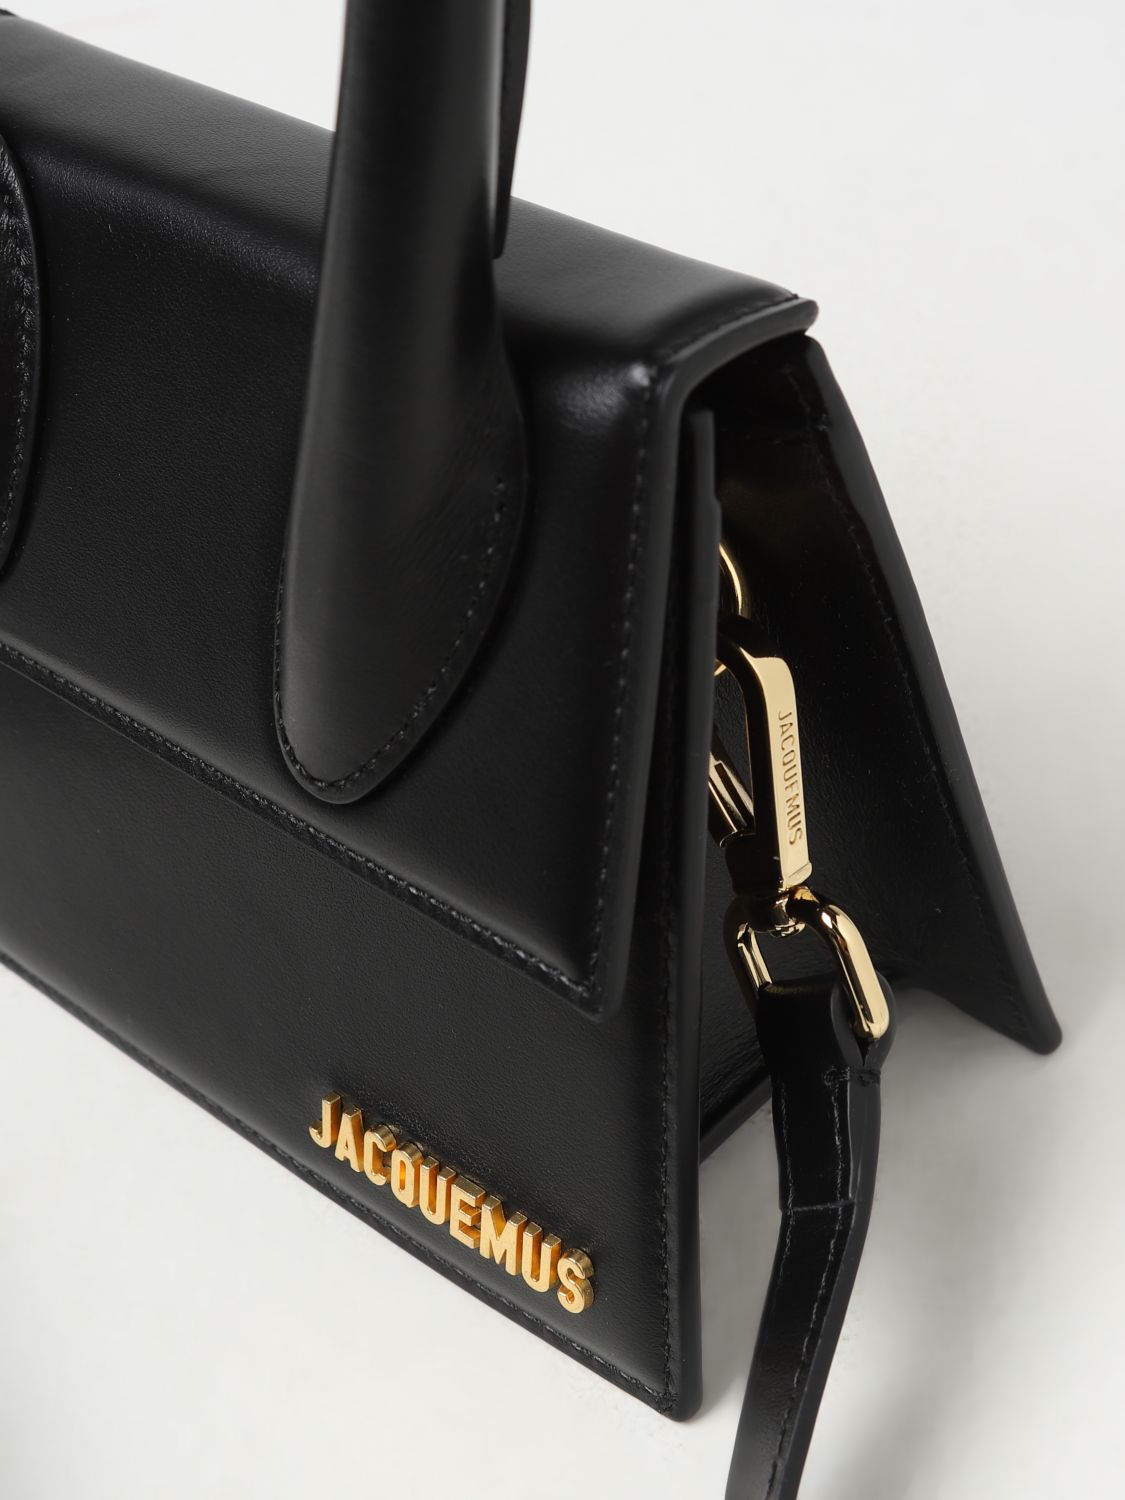 Jacquemus mini bag for woman